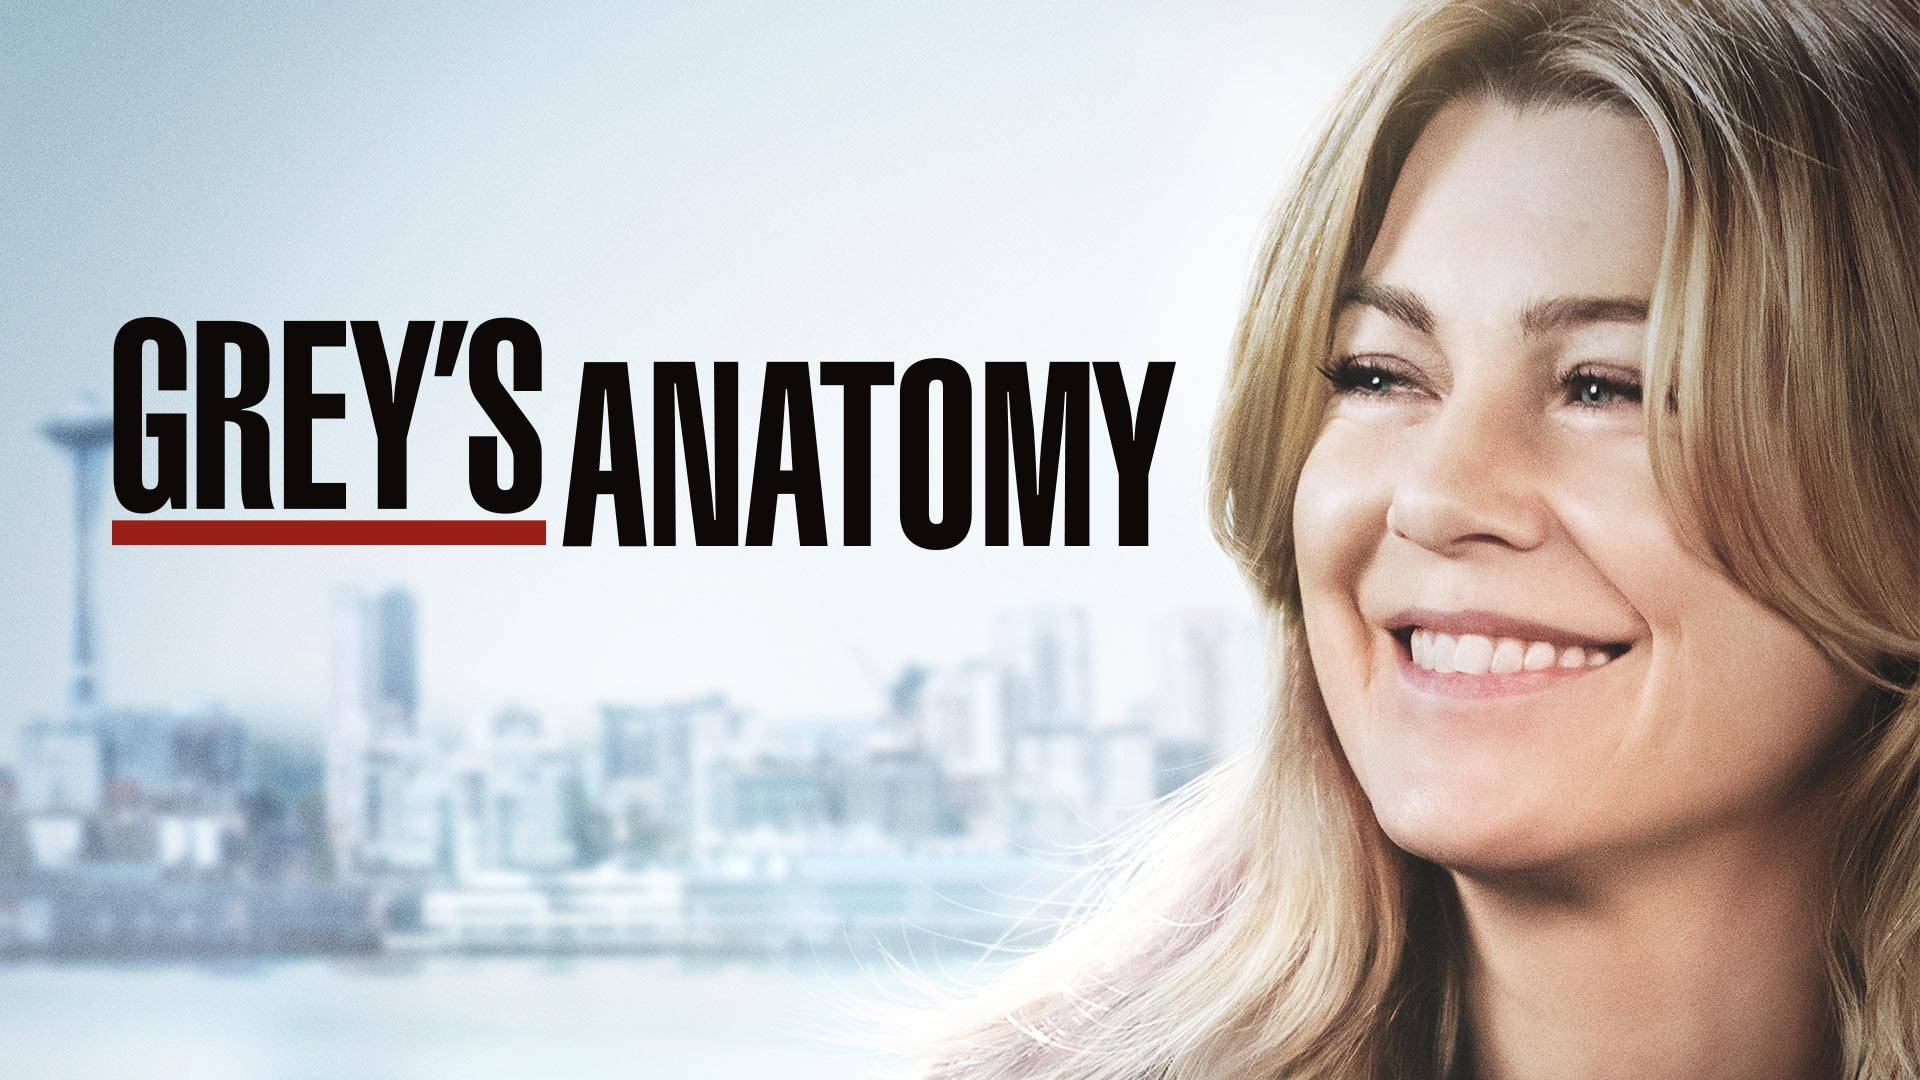 Grey's Anatomy Meredith Grey Poster Wallpaper